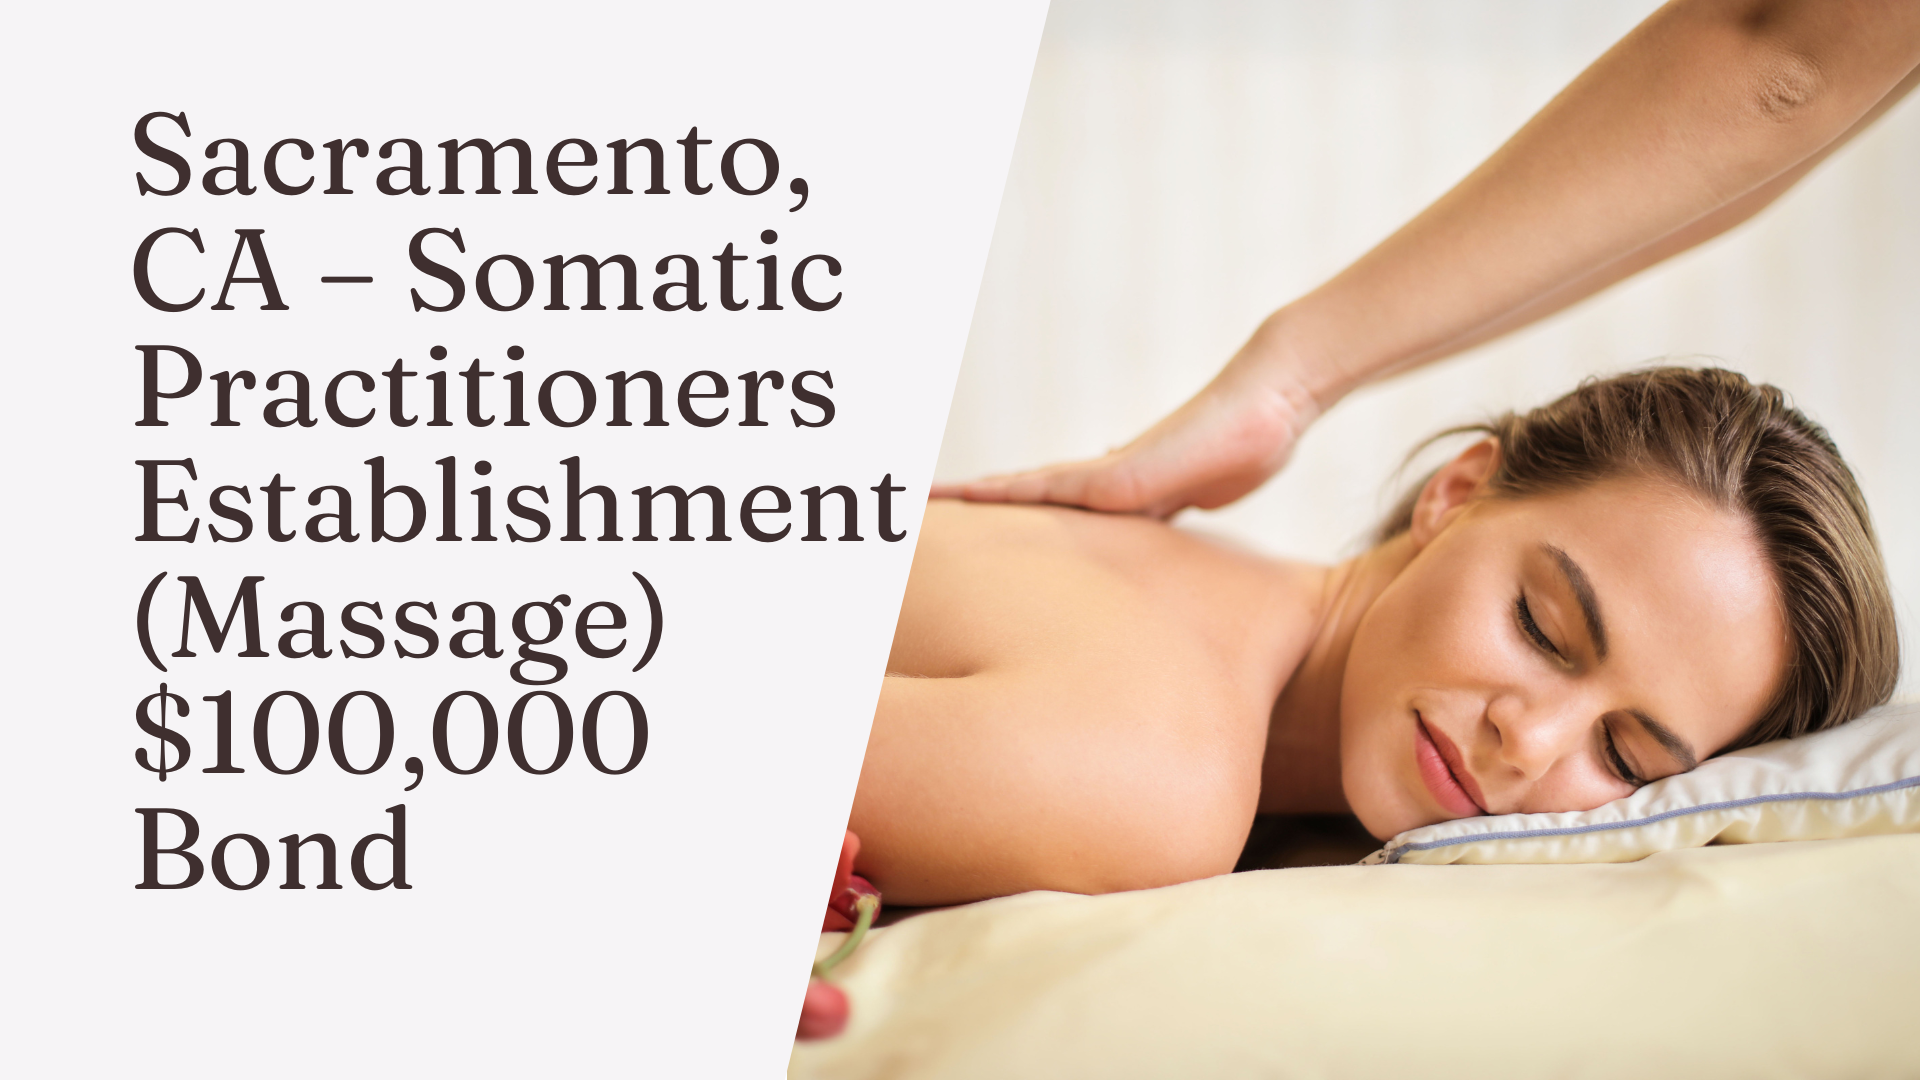 Surety Bond-Sacramento, CA – Somatic Practitioners Establishment (Massage) $100,000 Bond